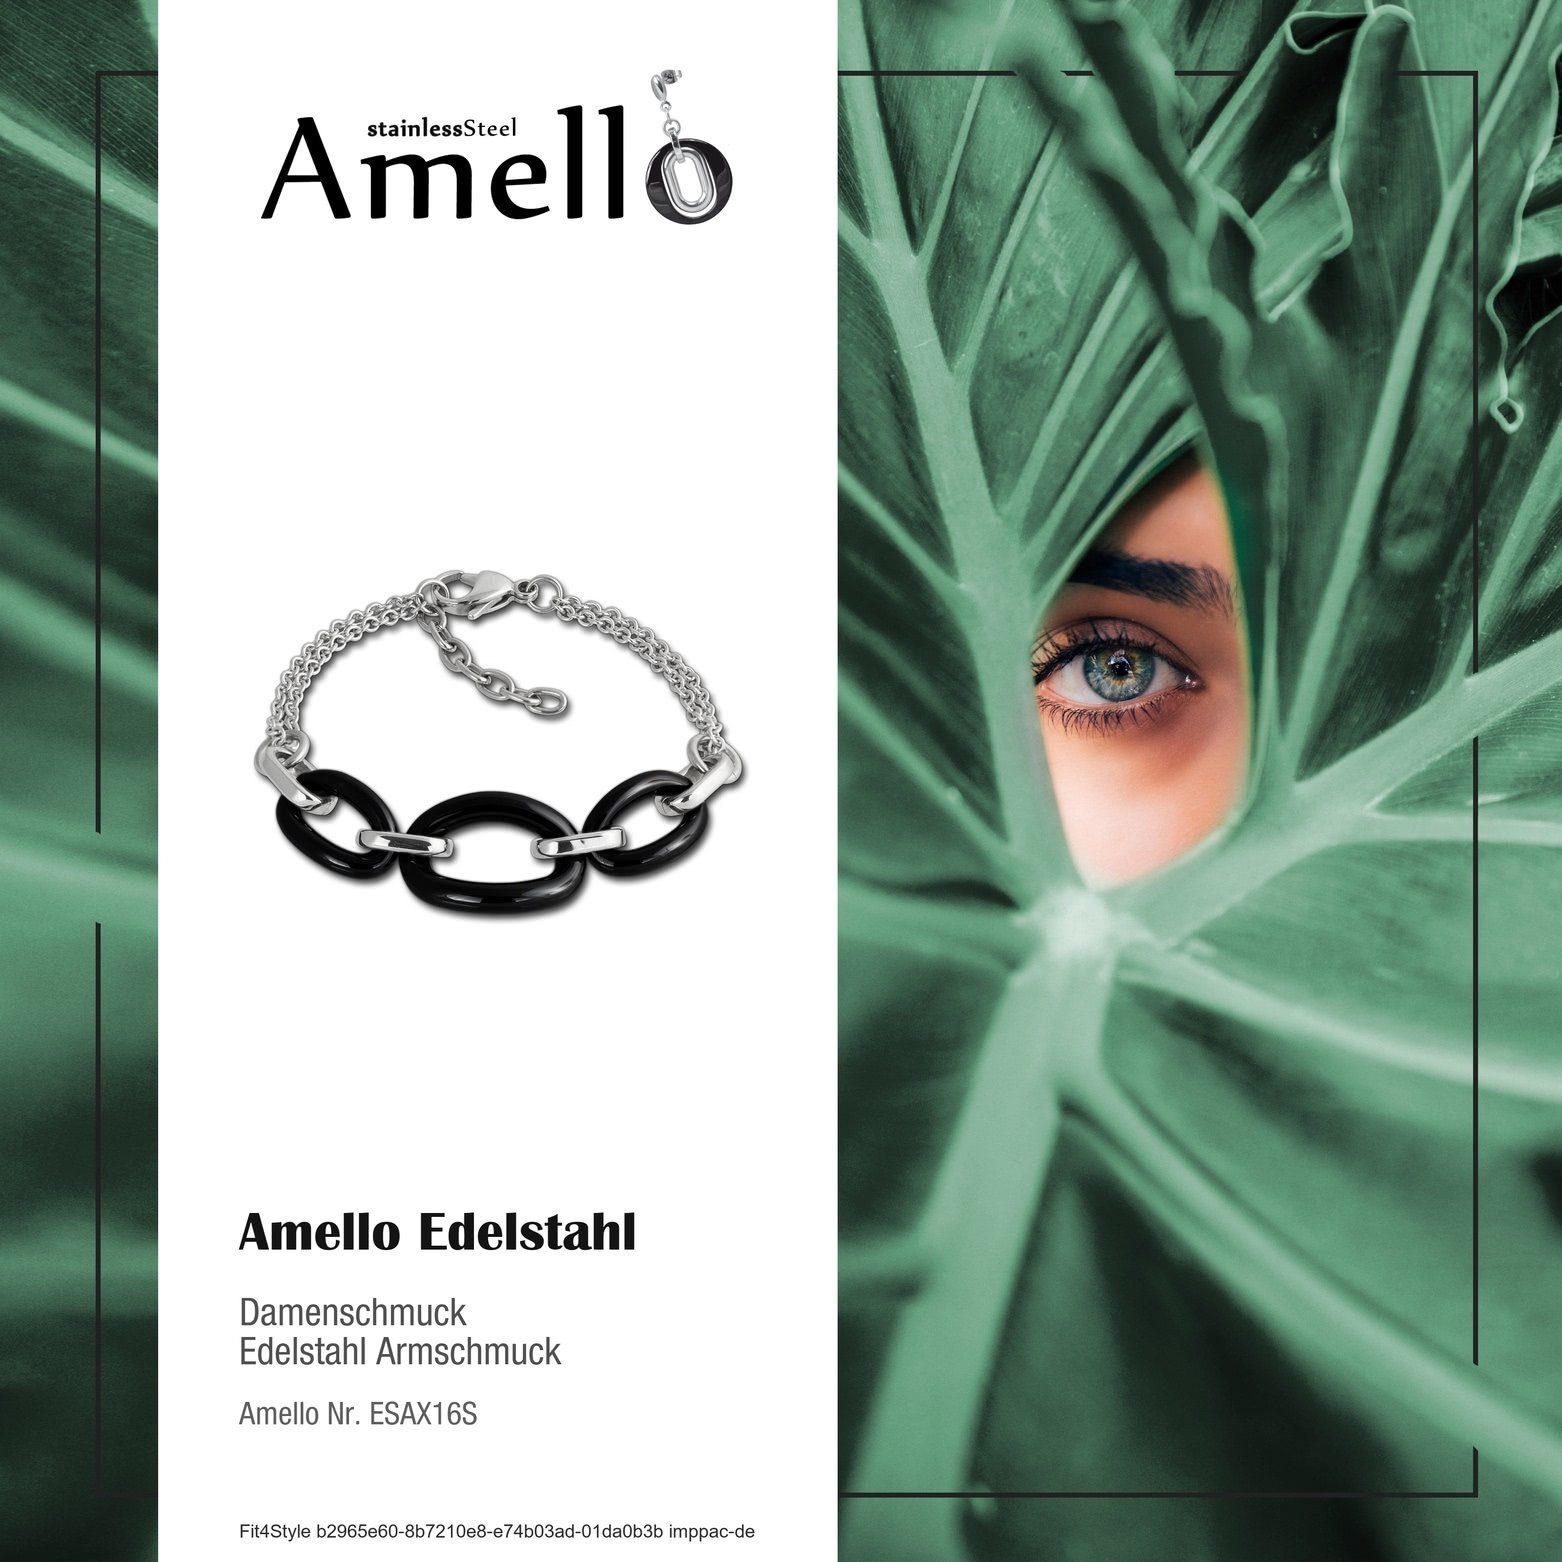 Amello Edelstahlarmband Amello Edelstahl (Armband), Armbänder schwarz (Stainless für silber Steel) Damen Ovale Armband